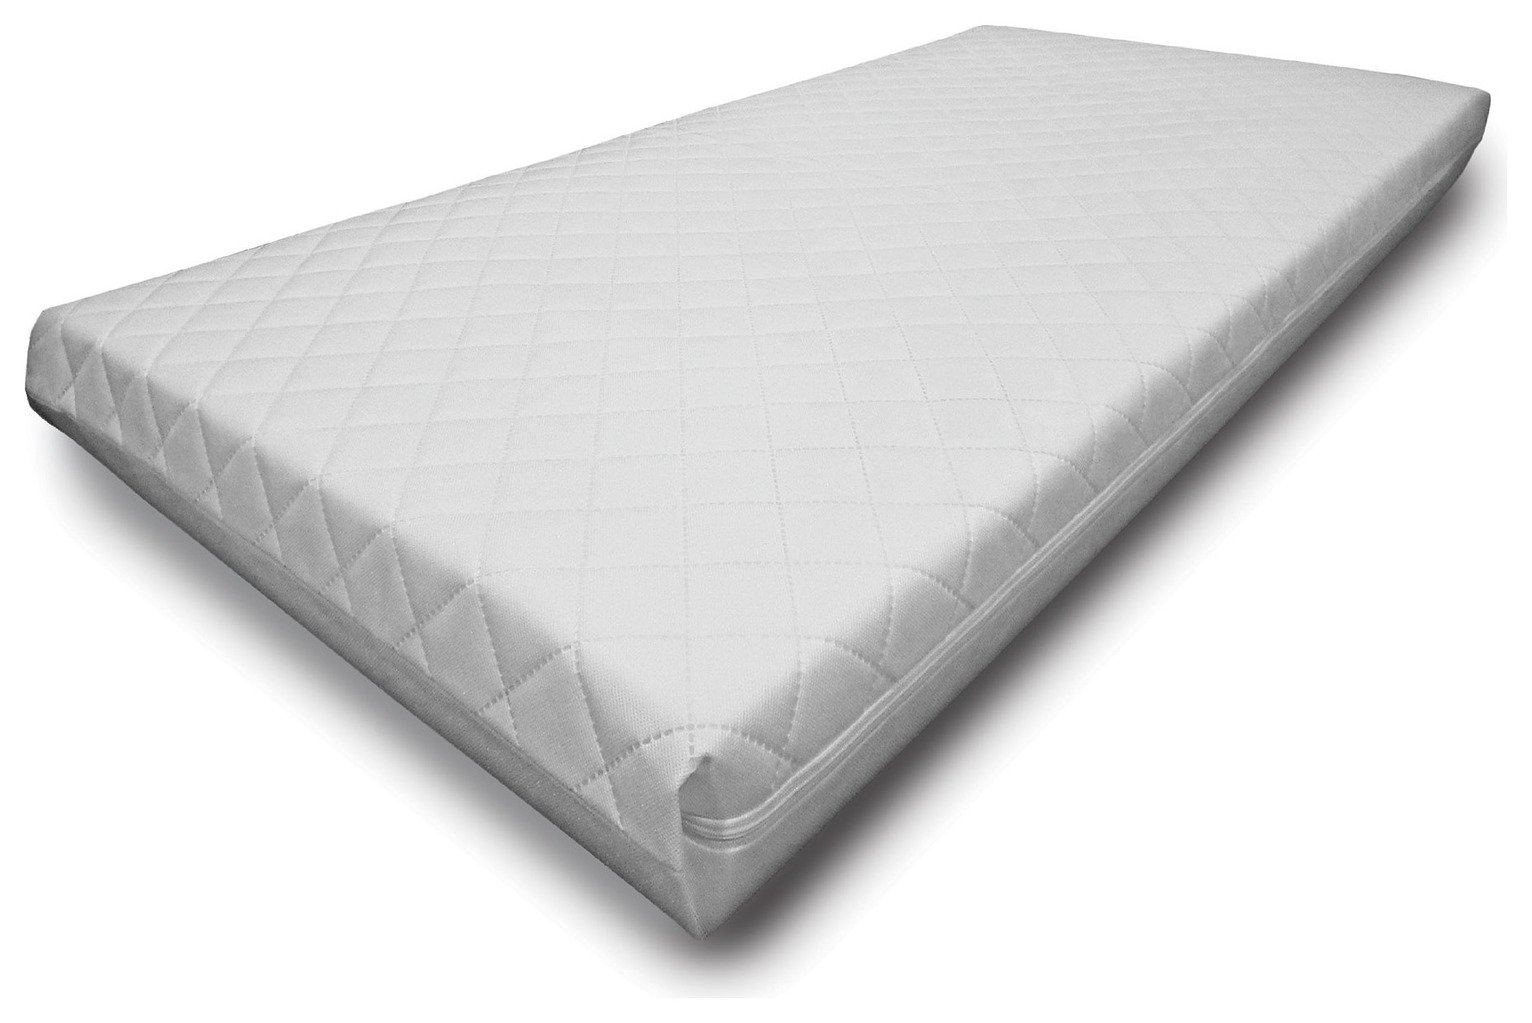 luxury cot bed mattress